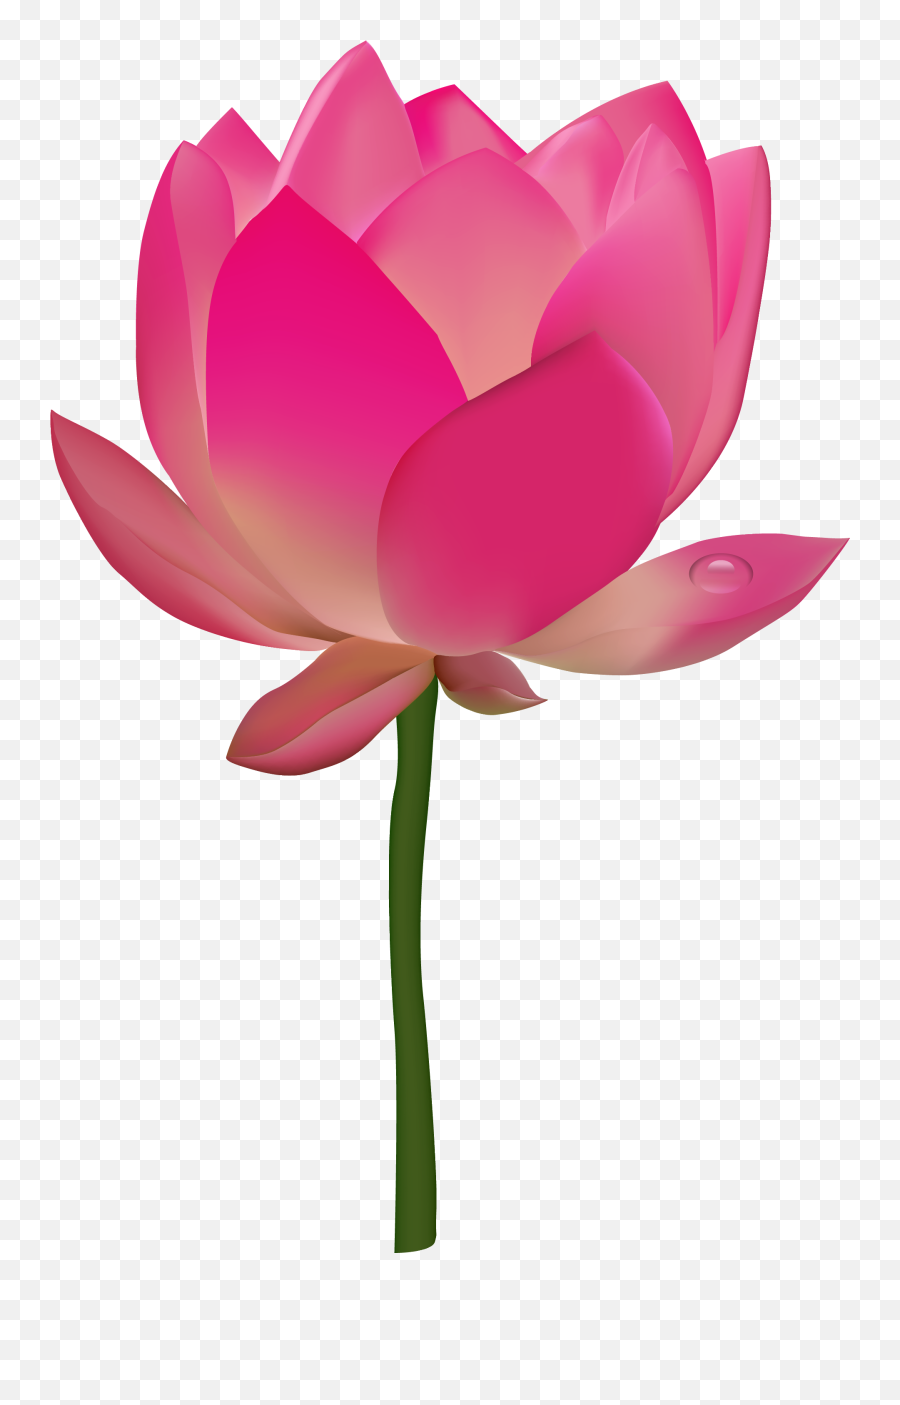 Flower Png Transparent - Clipart Image Of Lotus,Transparent Flower Images